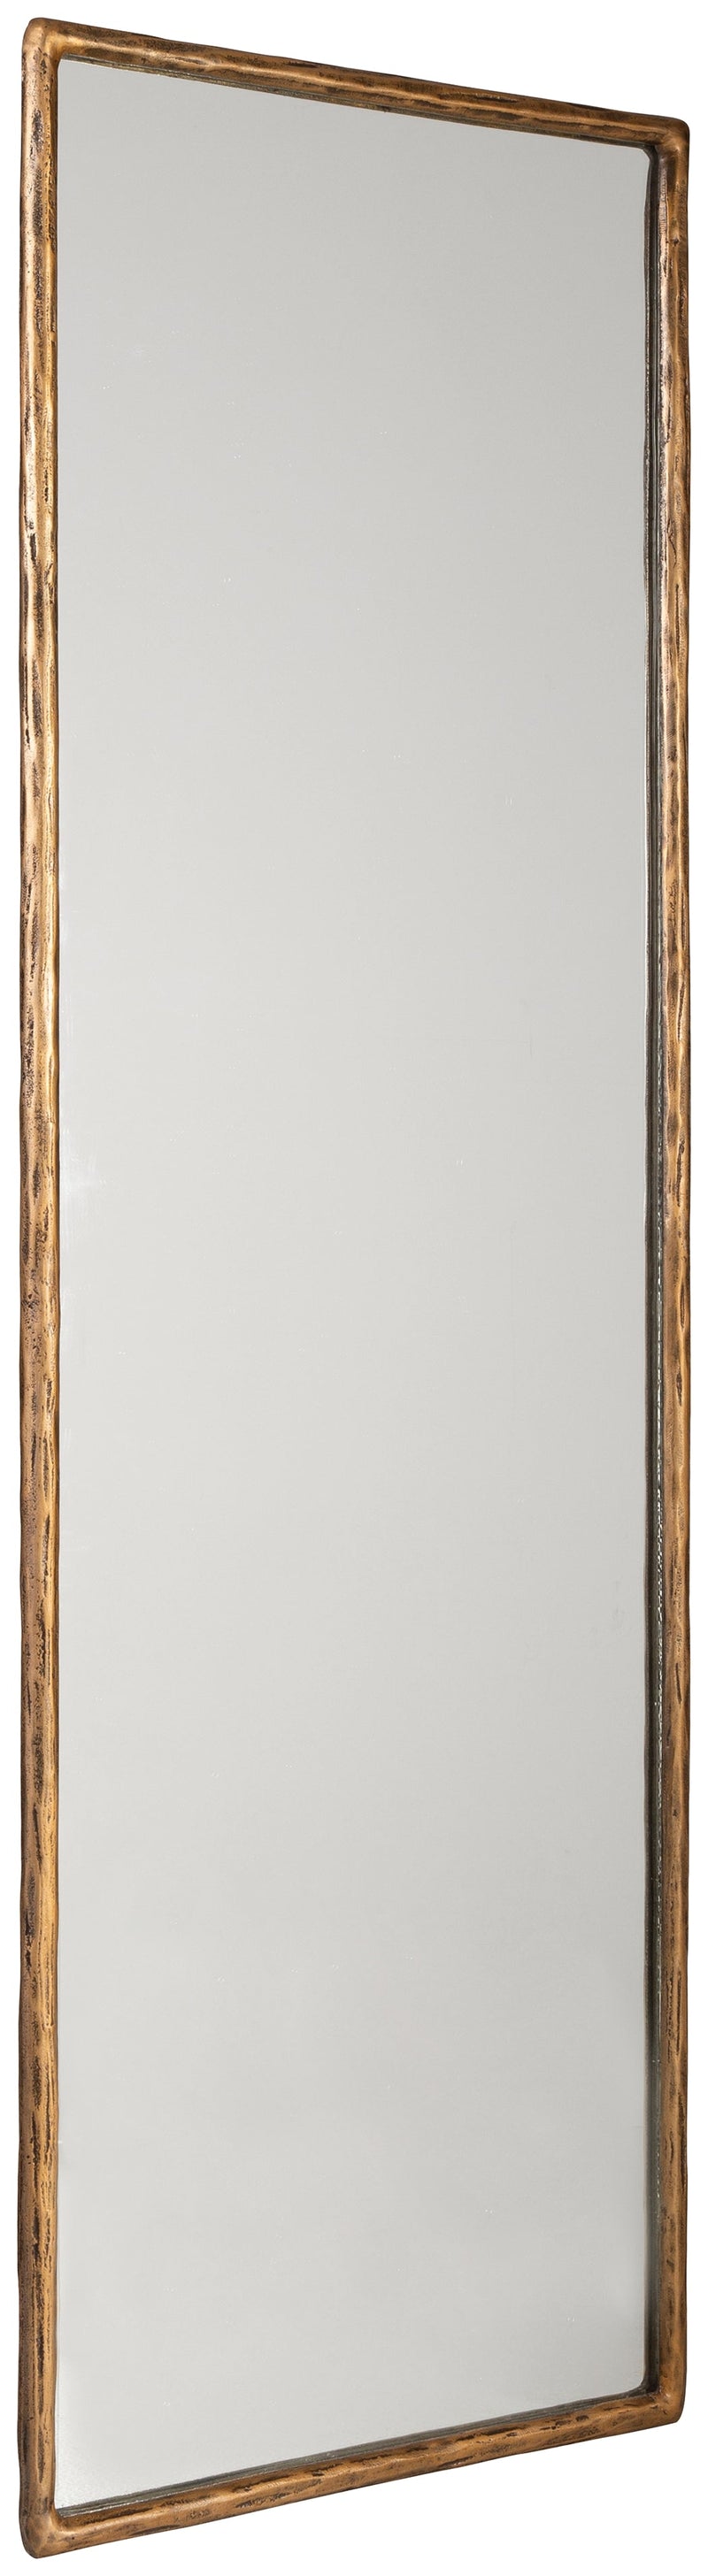 Ryandale Antique Brass Finish Floor Mirror